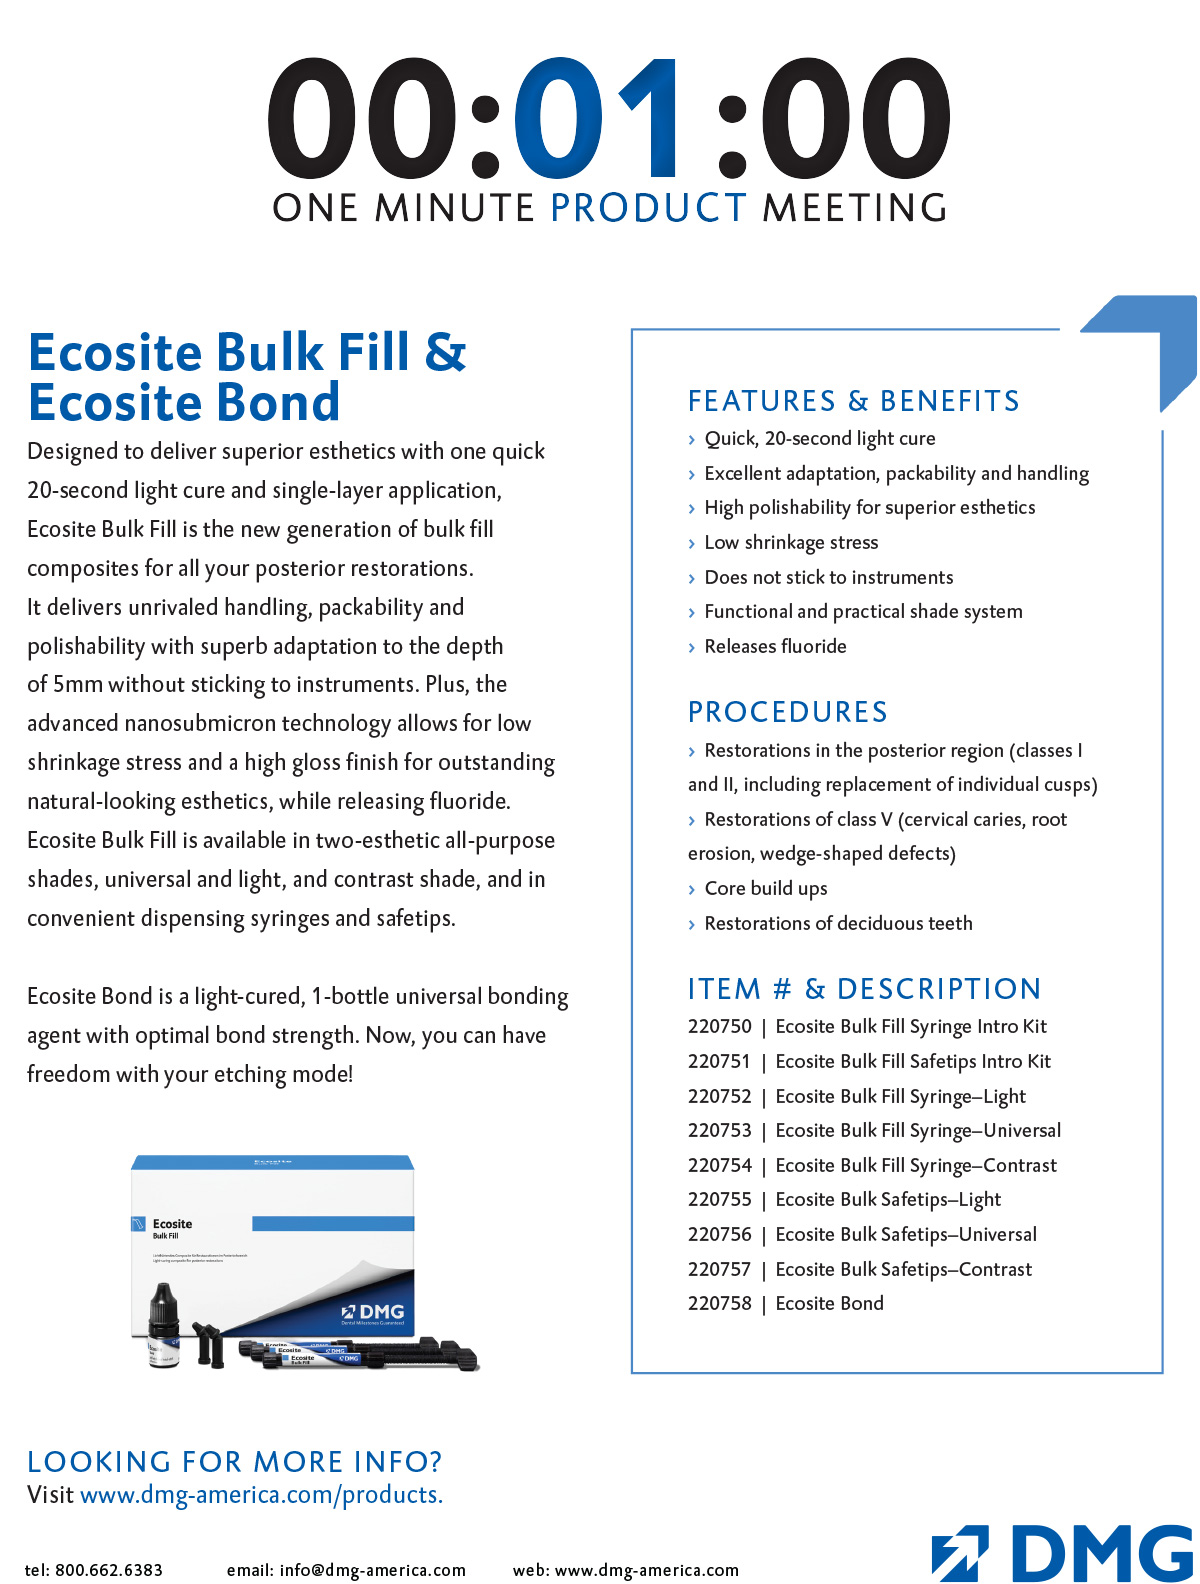 Ecosite Bulk Fill & Ecosite Bond